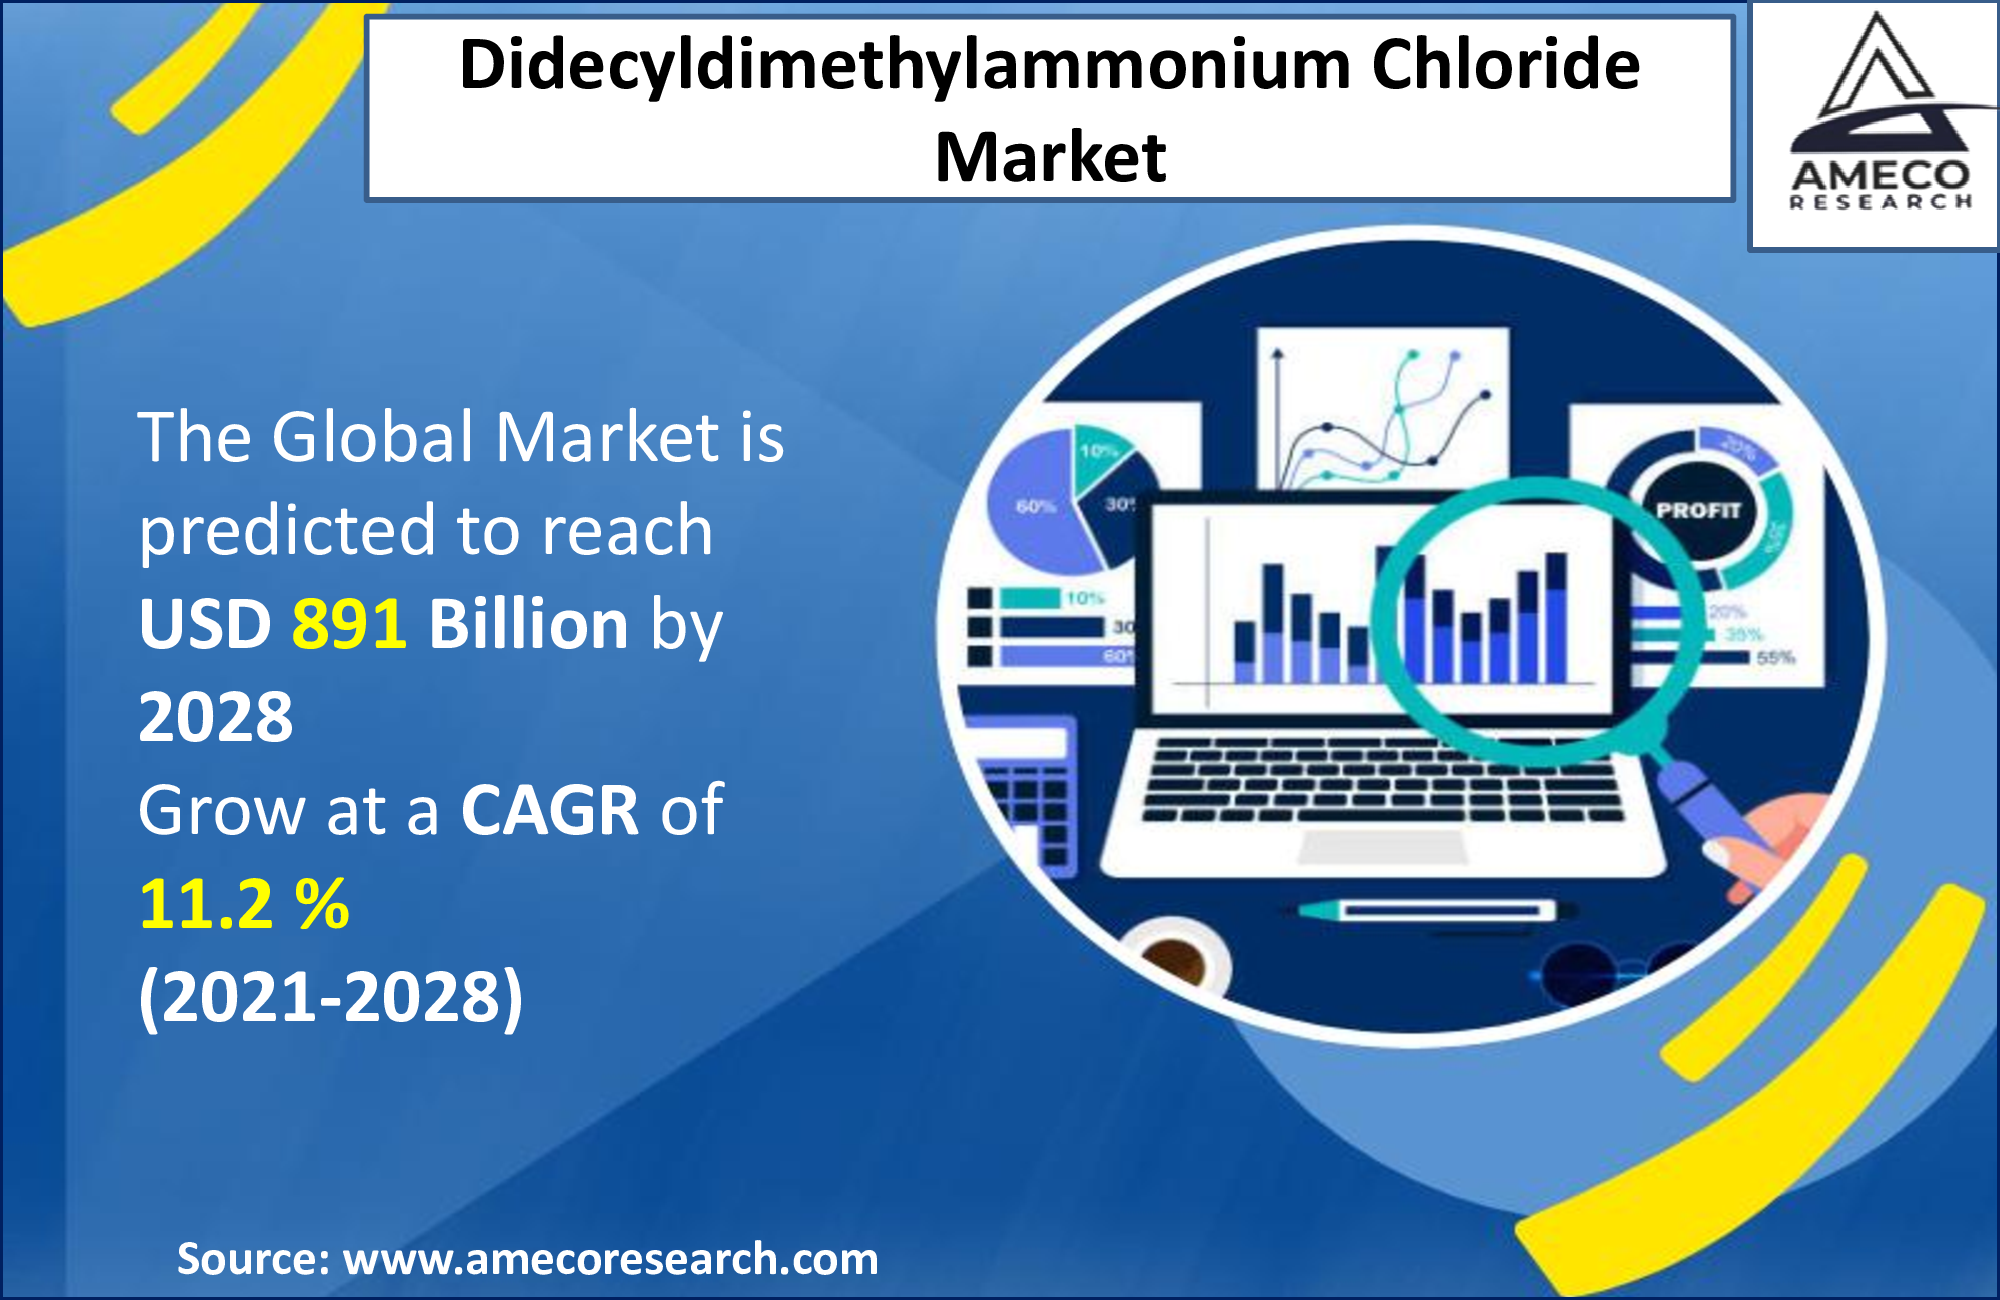 Didecyldimethylammonium Chloride Market